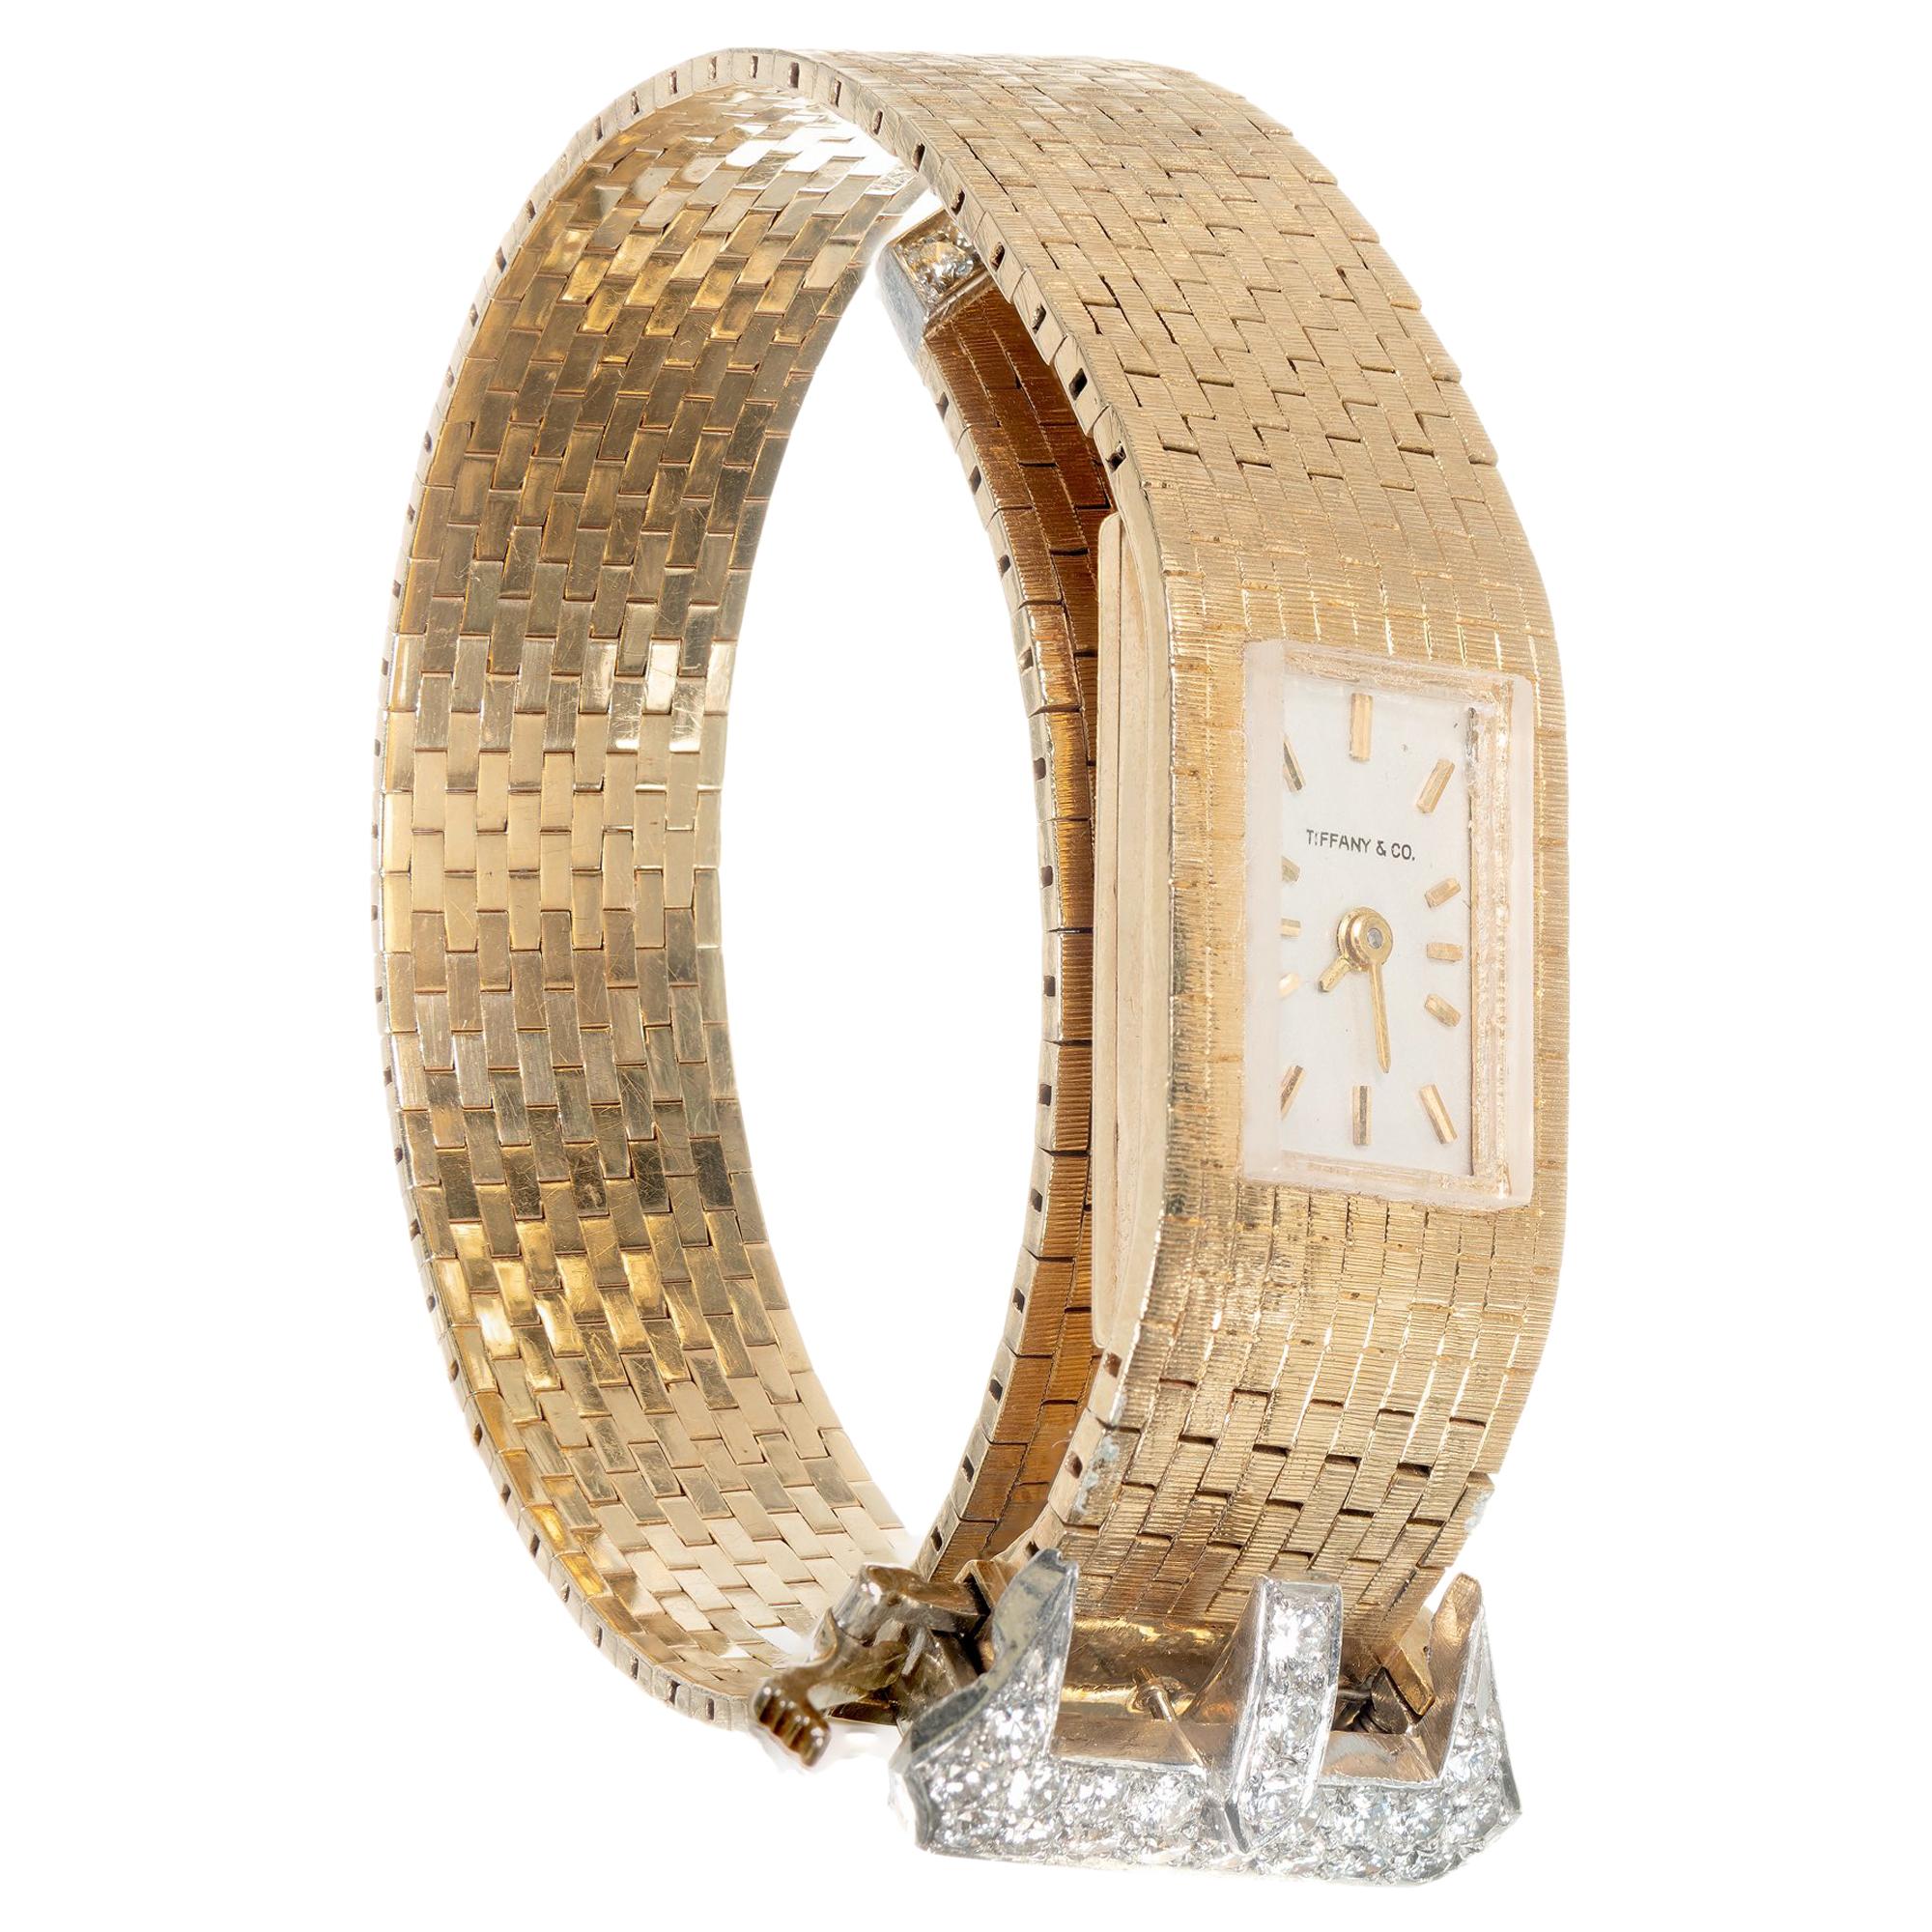 Tiffany & Co. Ladies Yellow Gold Diamond Buckle Bracelet Wristwatch, circa 1950s